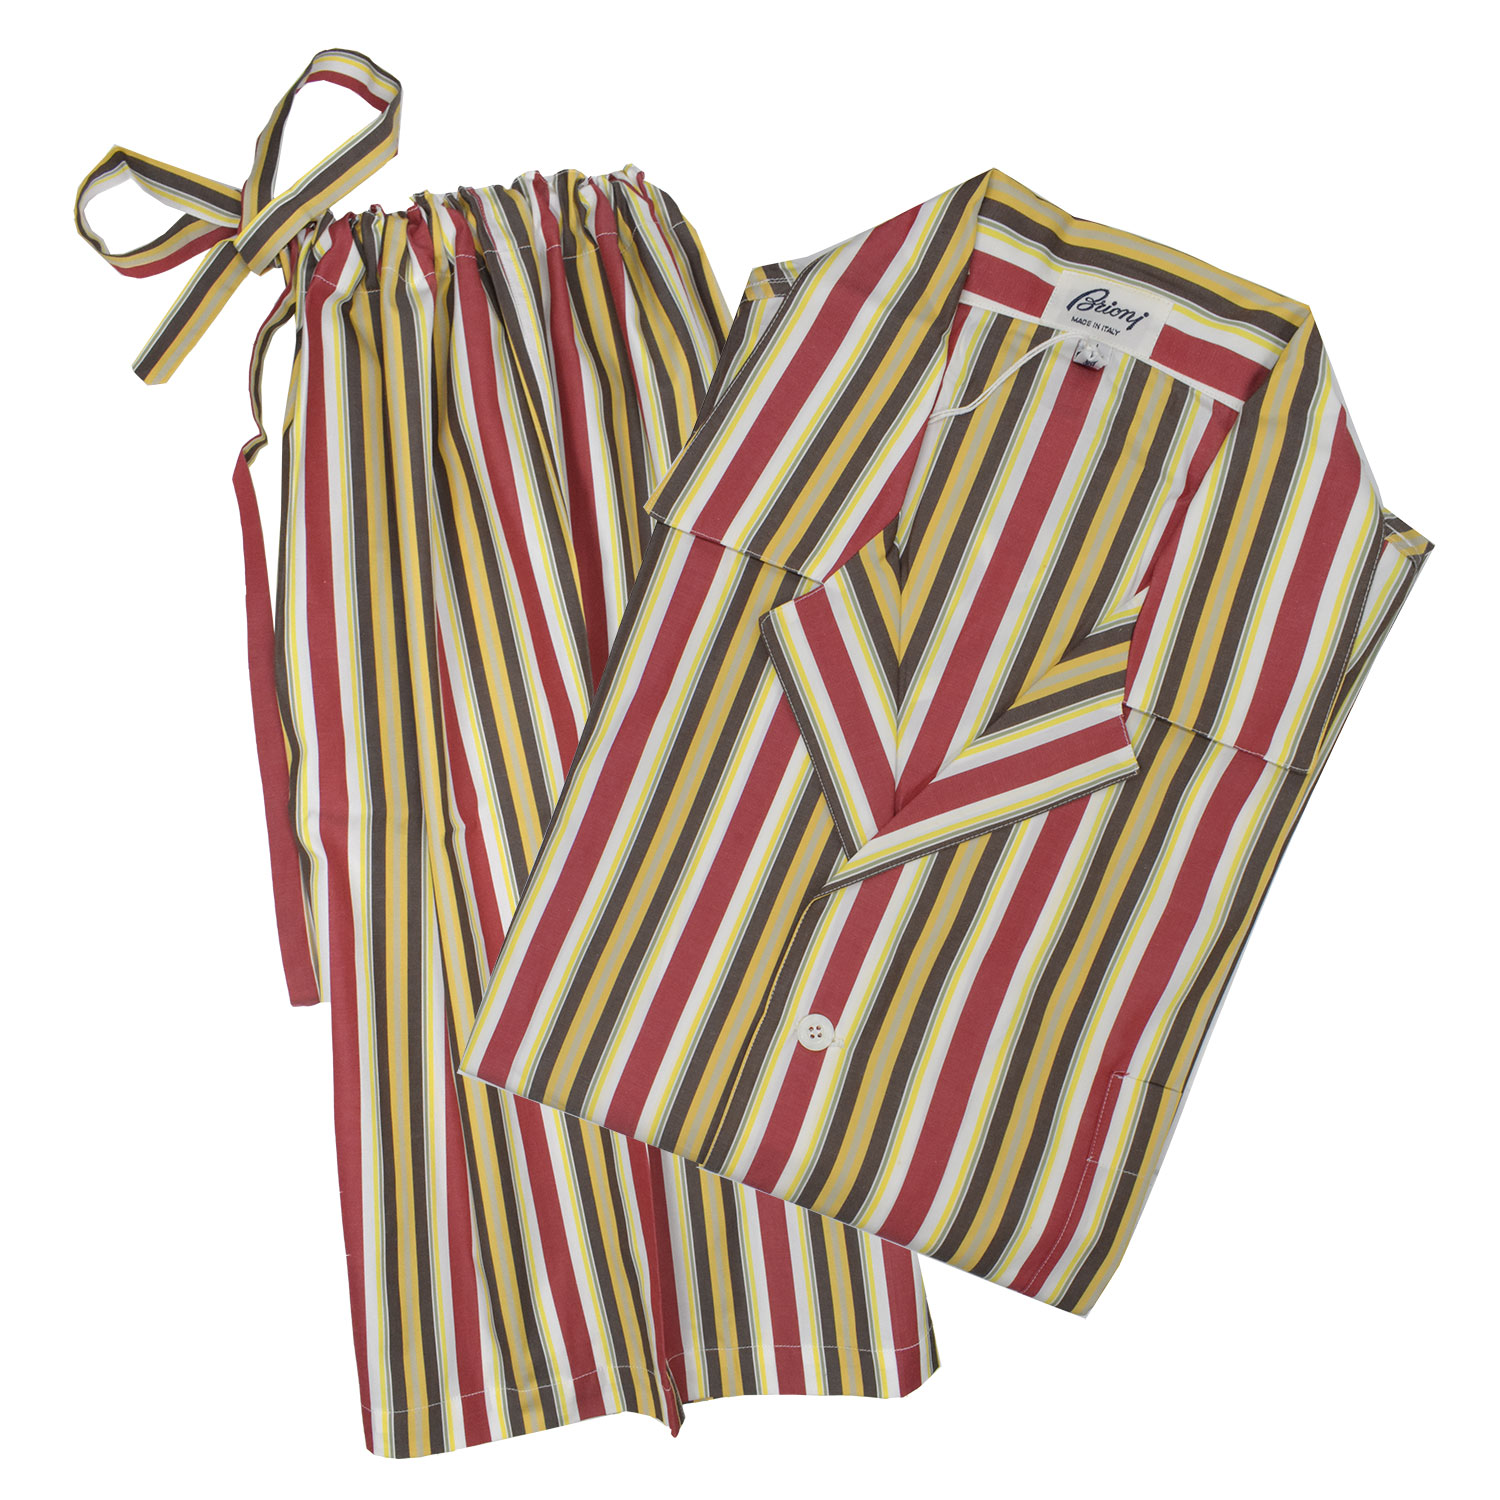 Brioni Men's Multi Color Striped Shorts Pajamas (S)